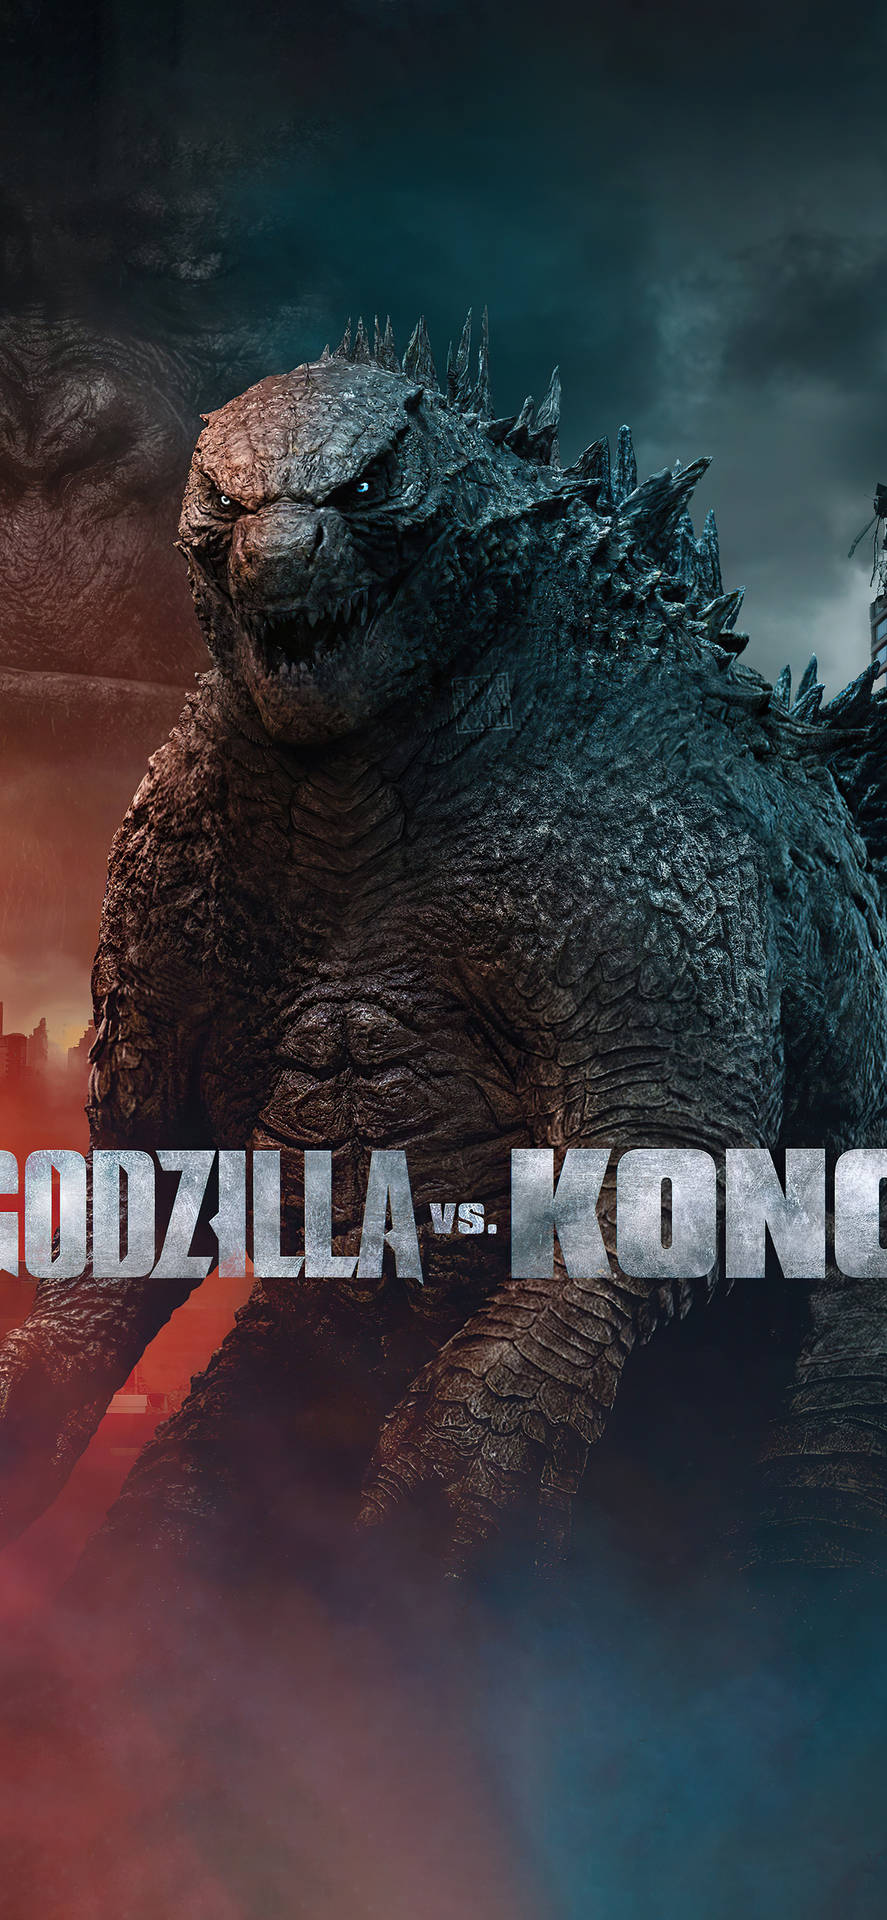 "The epic showdown of 2021: Godzilla vs. Kong" Wallpaper